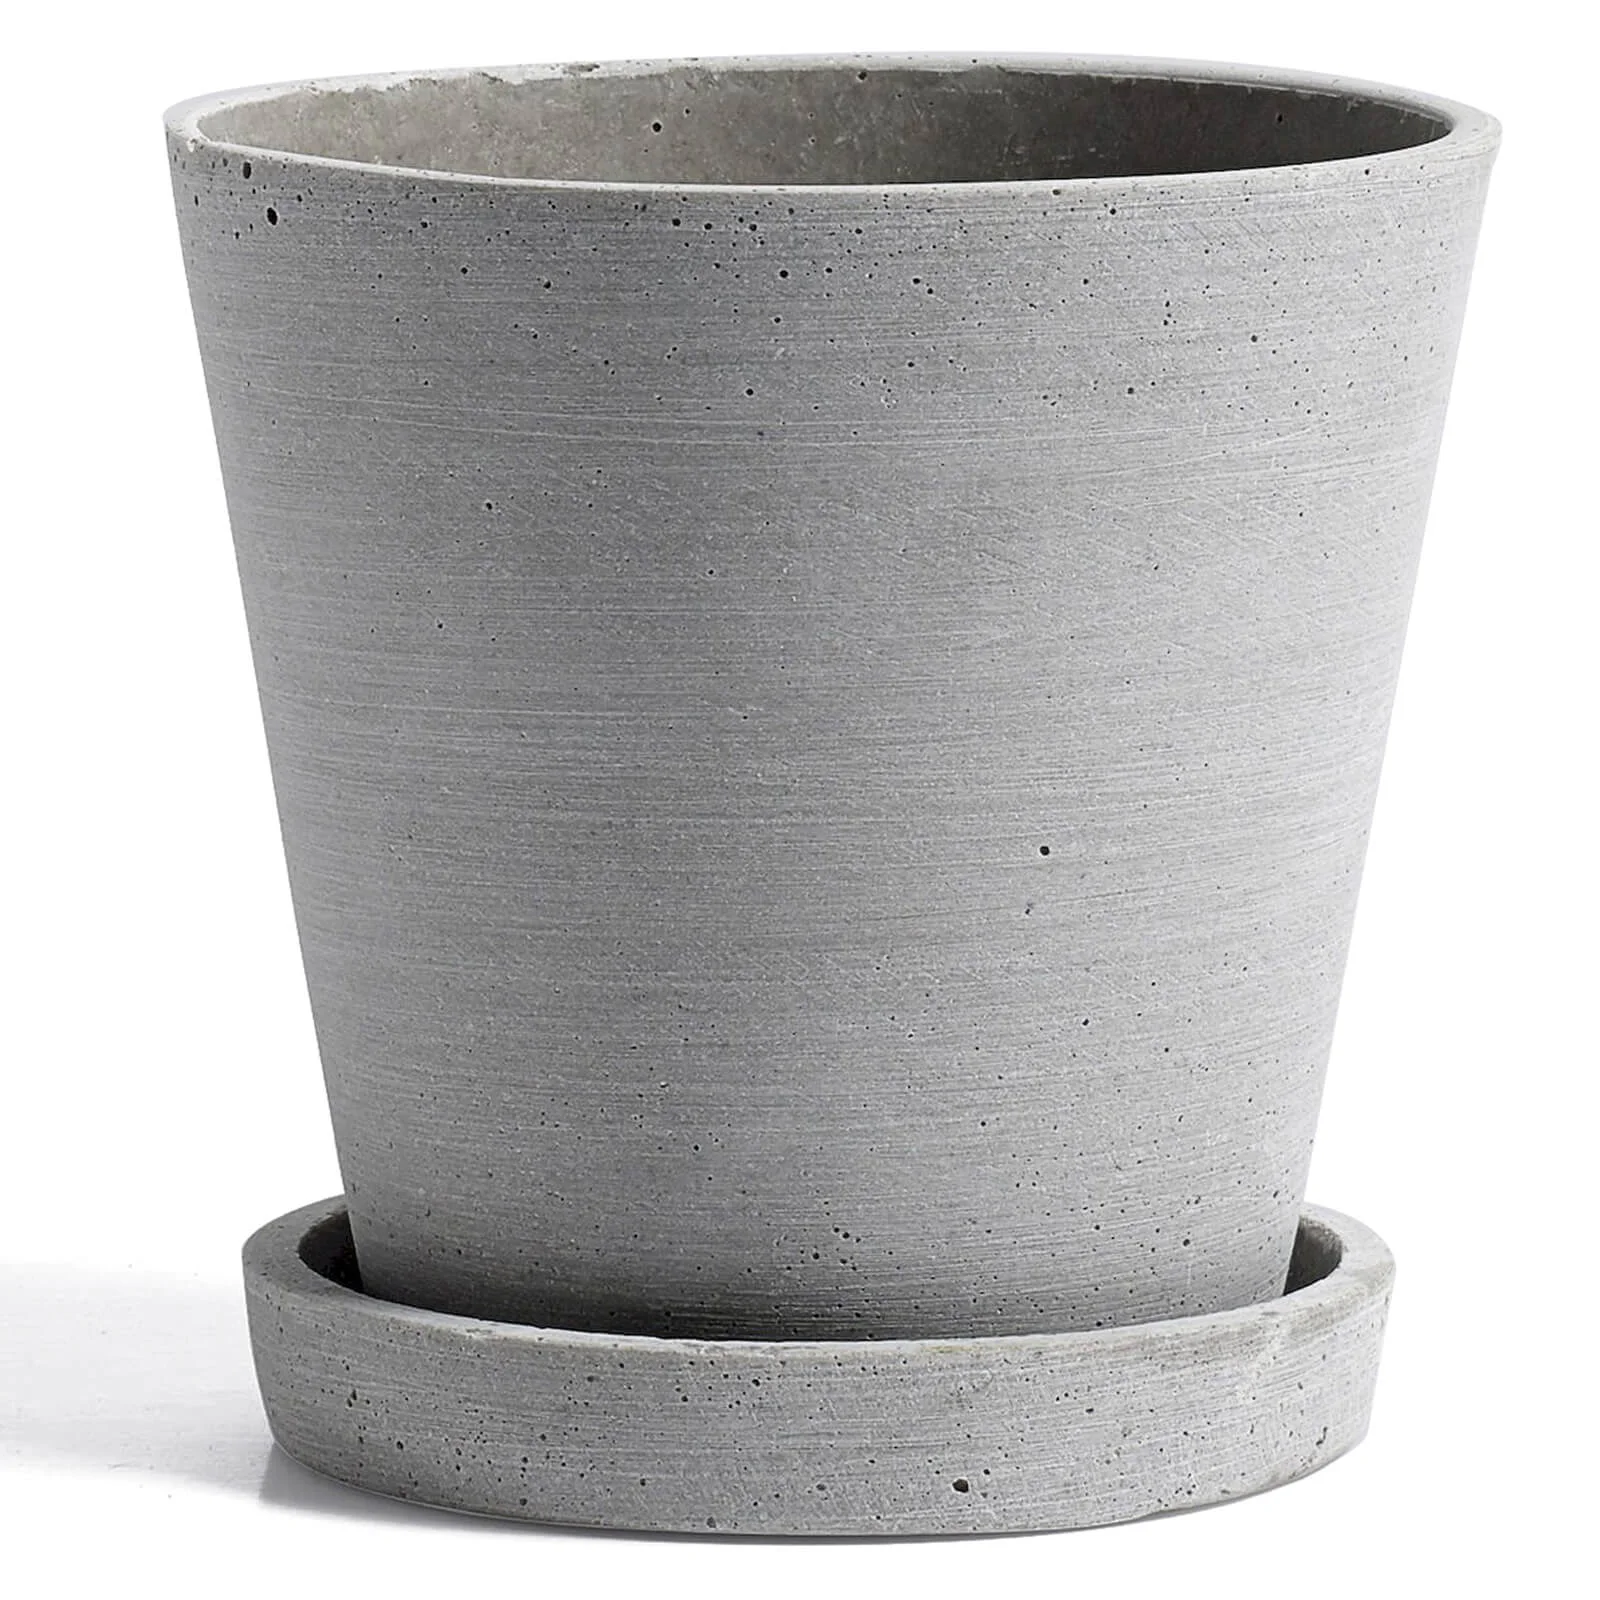 HAY Flowerpot with Saucer - Medium - Grey Image 1